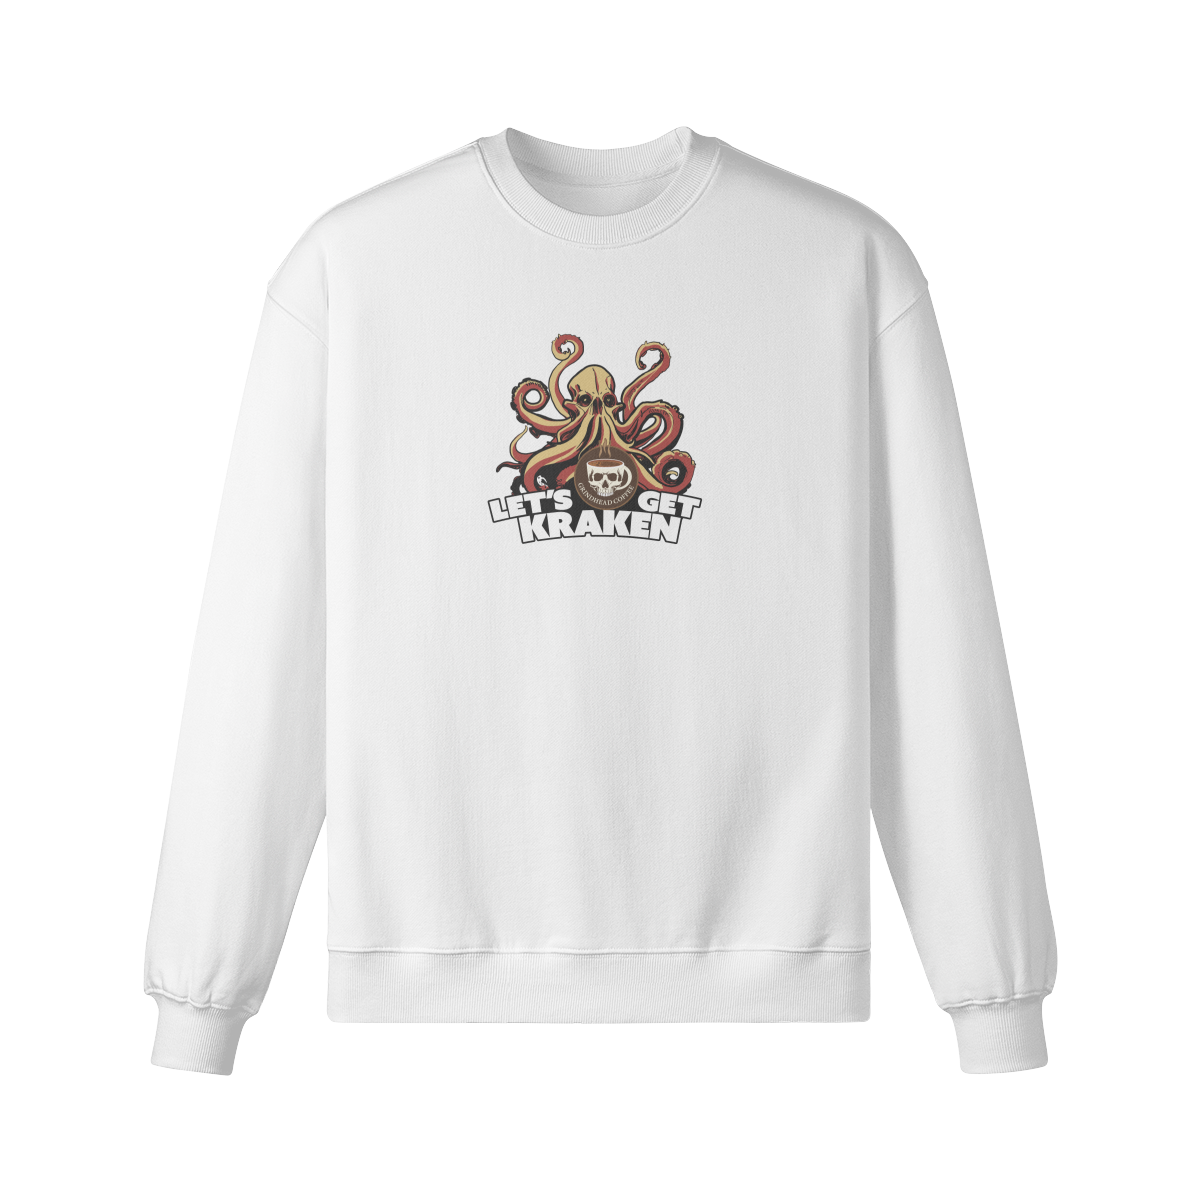 Womens Grindhead Sweatshirt with Kraken - Cotton